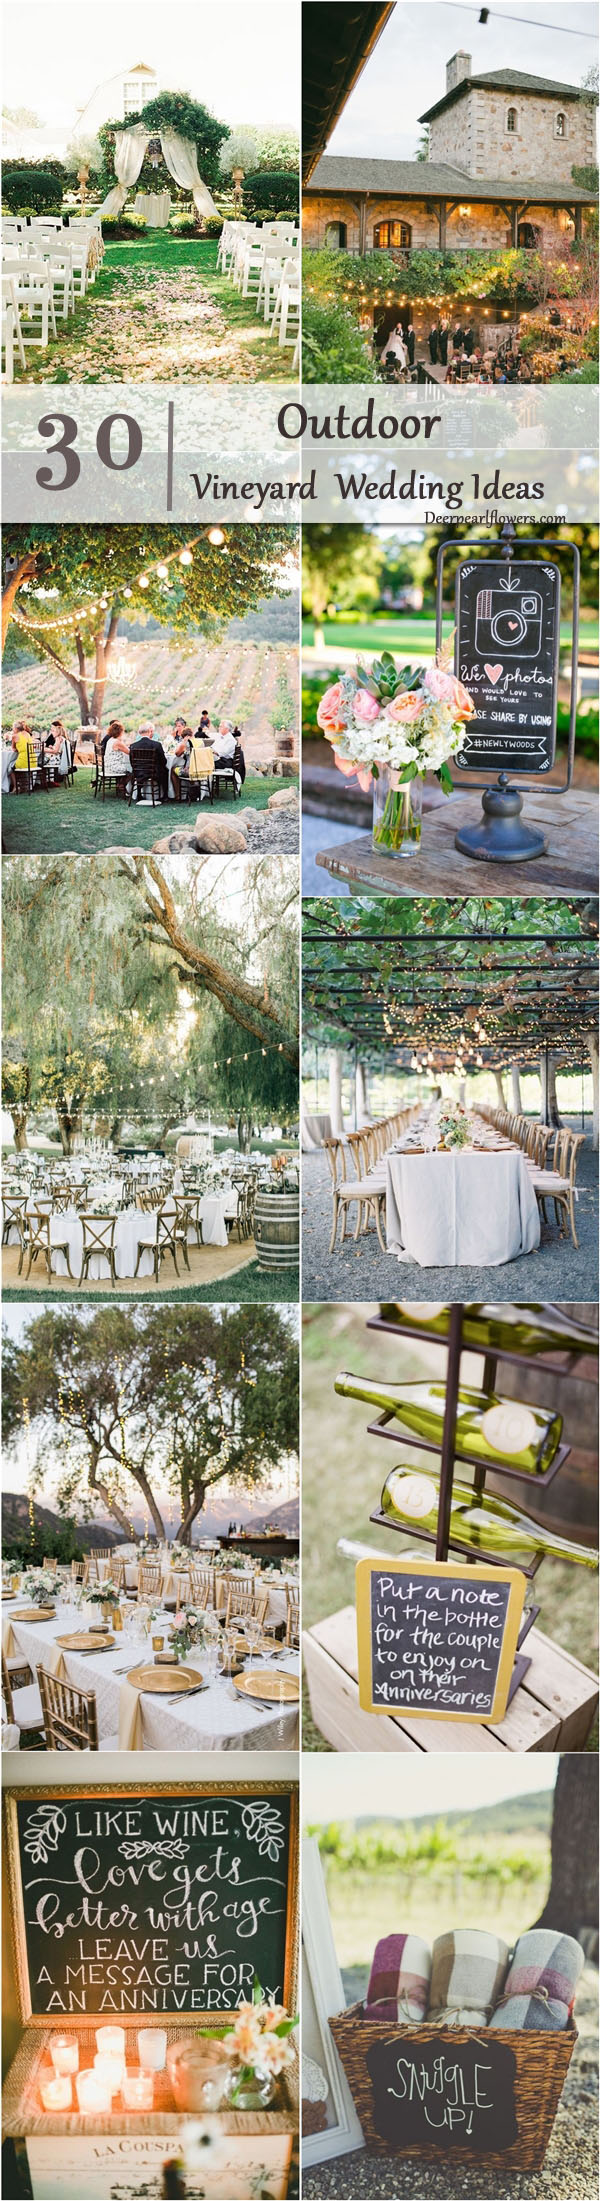 Vineyard Outdoor Wedding Decor Ideas